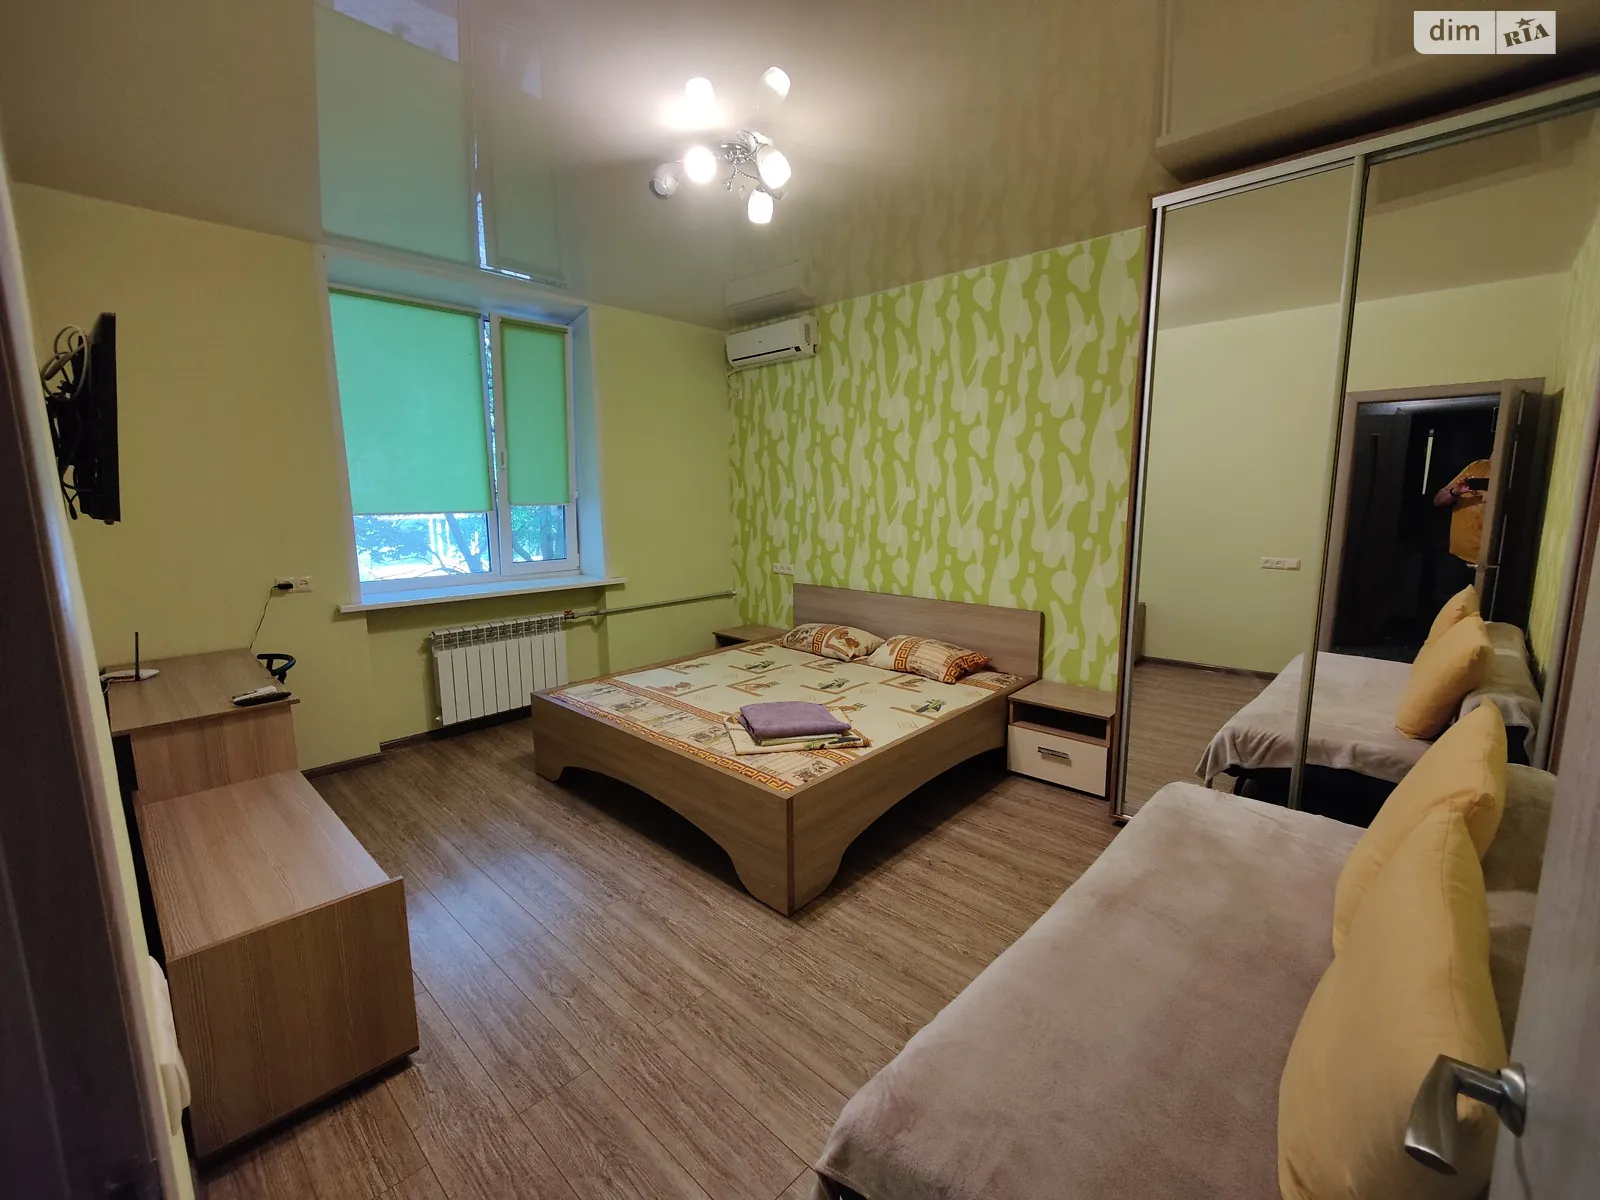 1-кімнатна квартира у Запоріжжі, цена: 899 грн